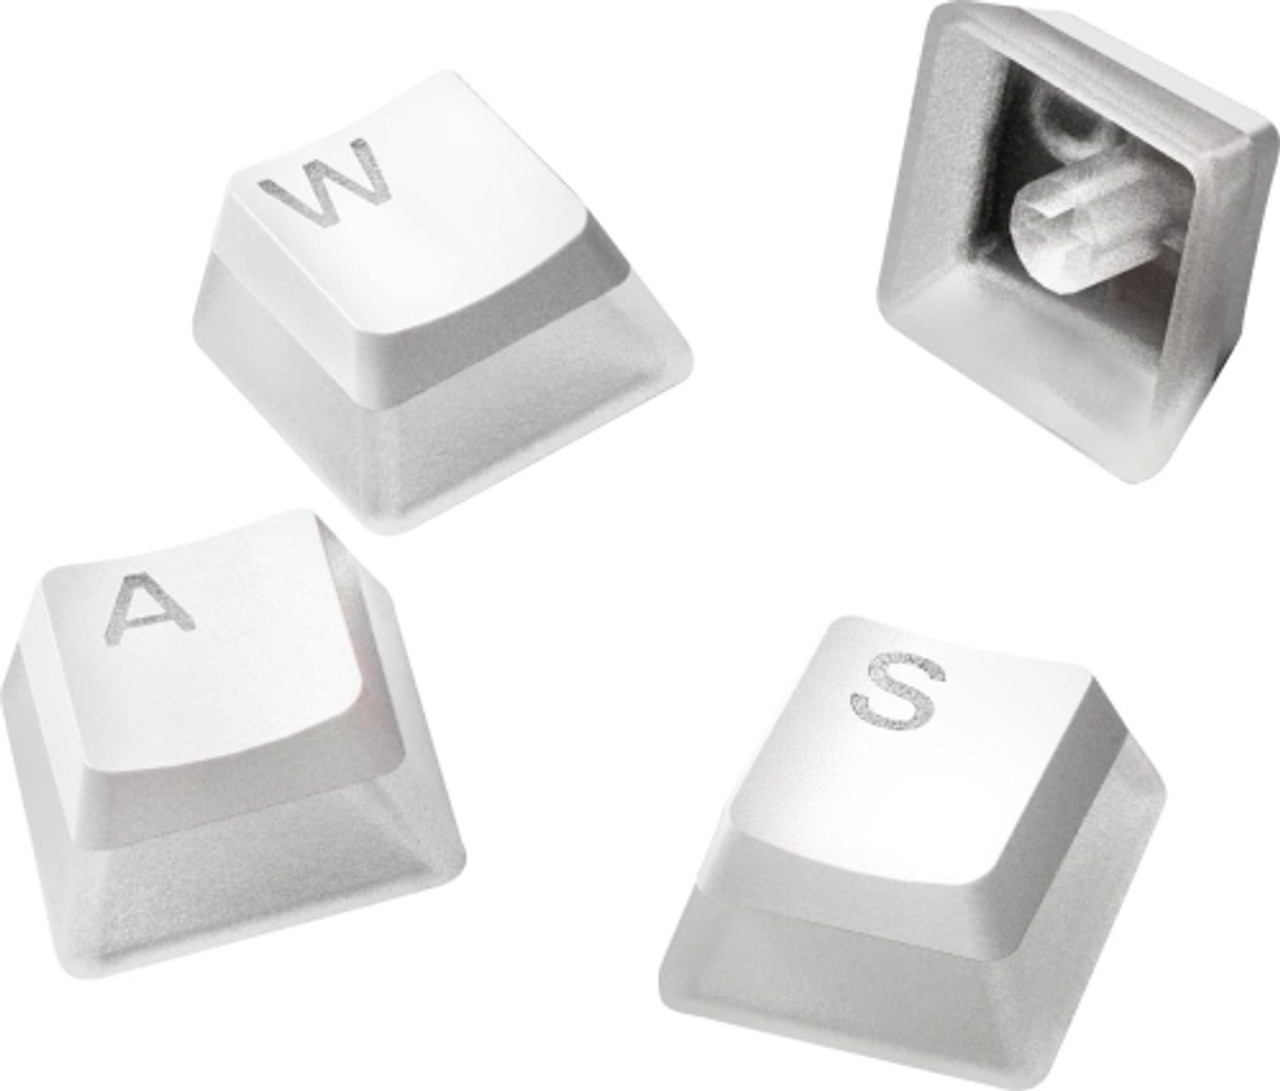 SteelSeries - PRISMCAPS Keycap Set - White